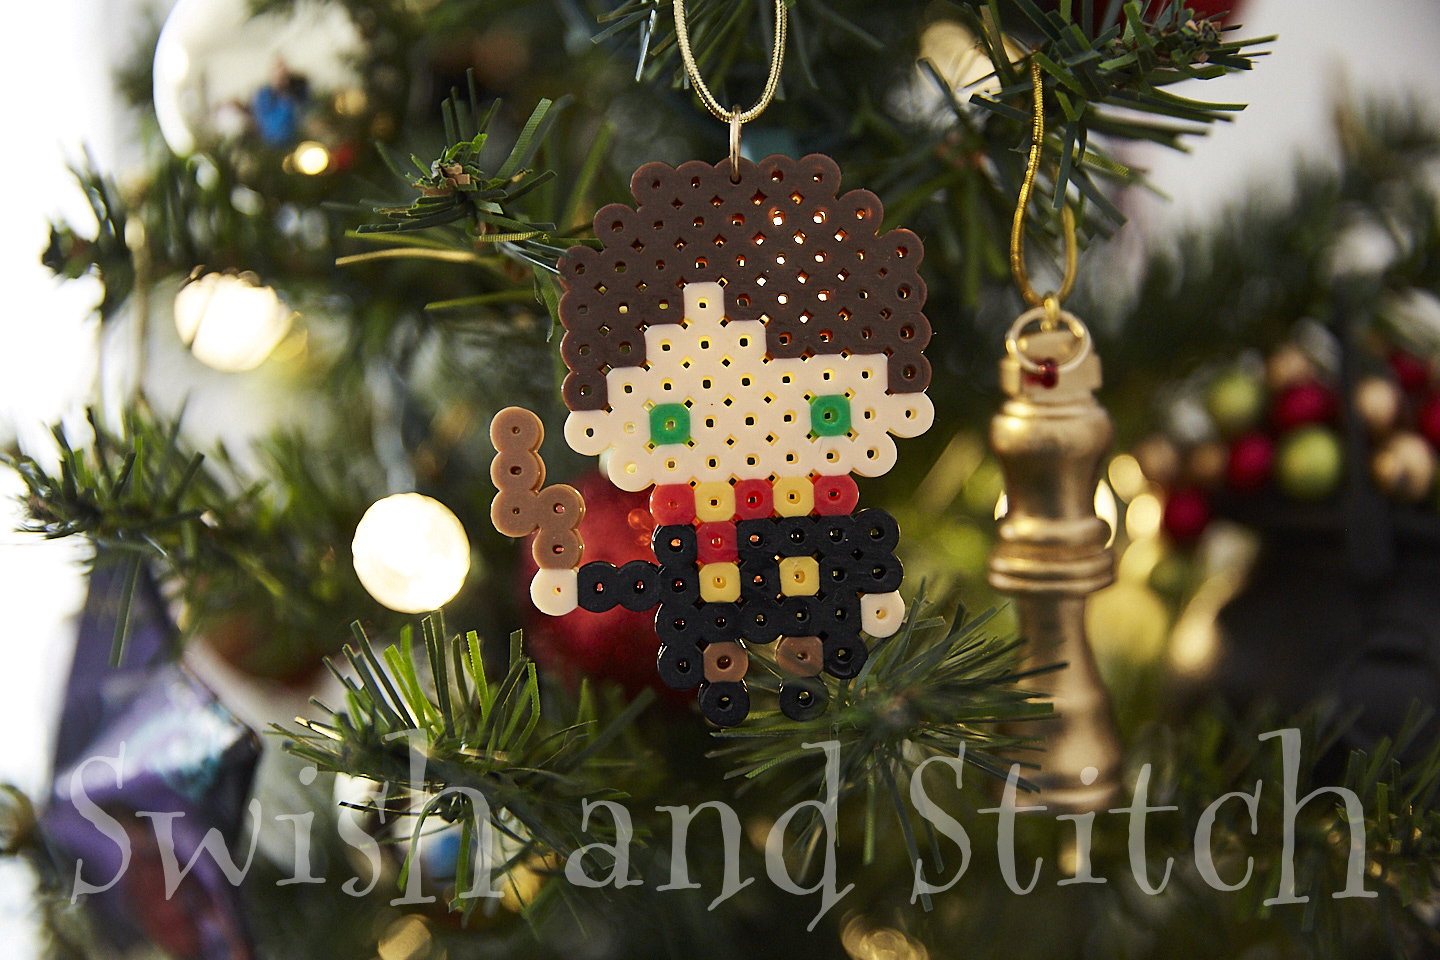 Perler Bead Christmas Ornament Frames: An Easy Holiday Craft!